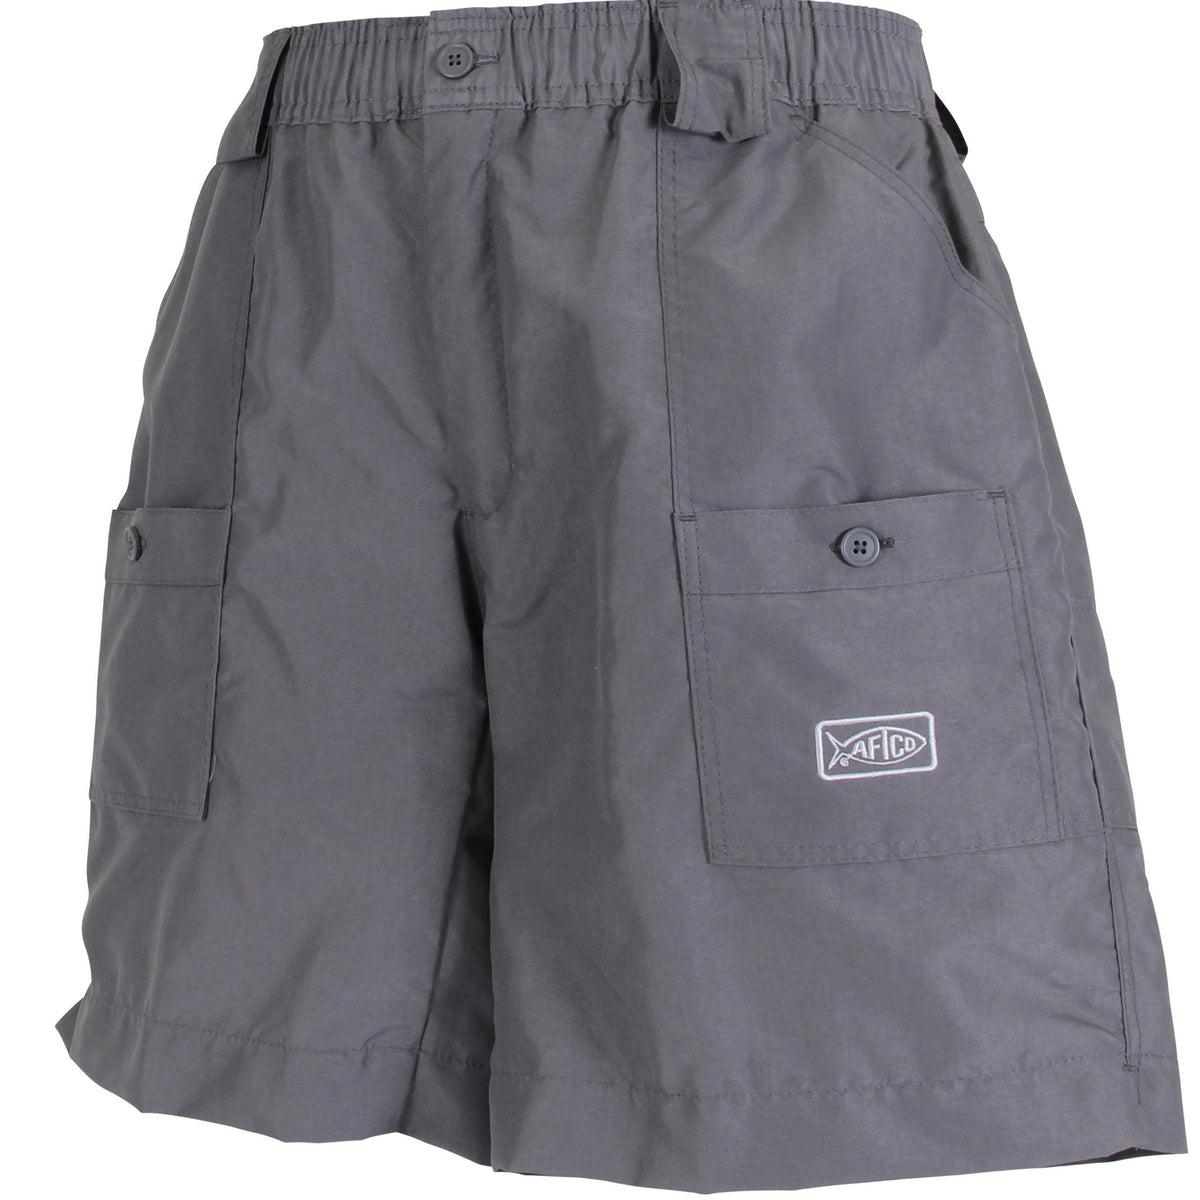 AFTCO- Original Fishing Shorts Long, Charcoal 34